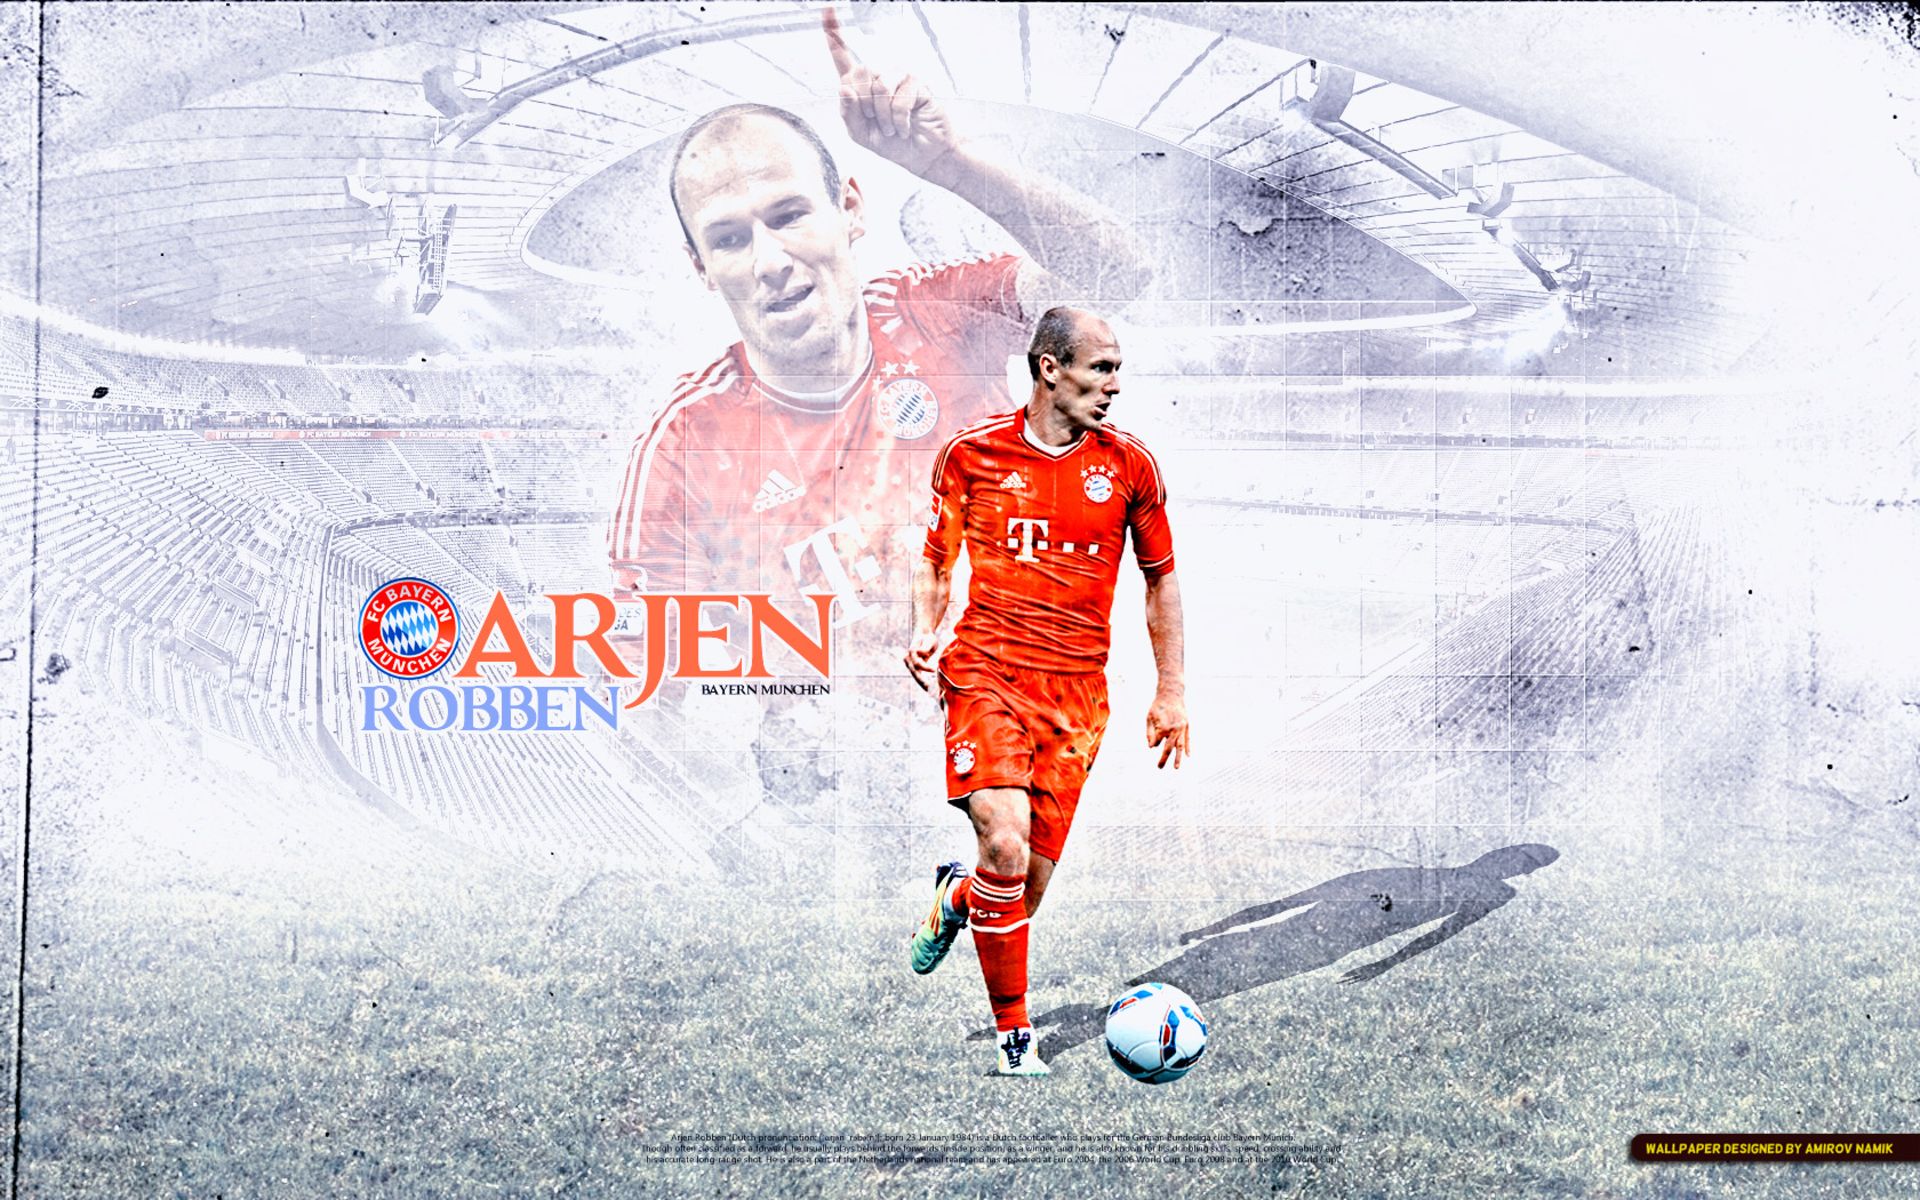  Arjen Robben HQ Background Wallpapers